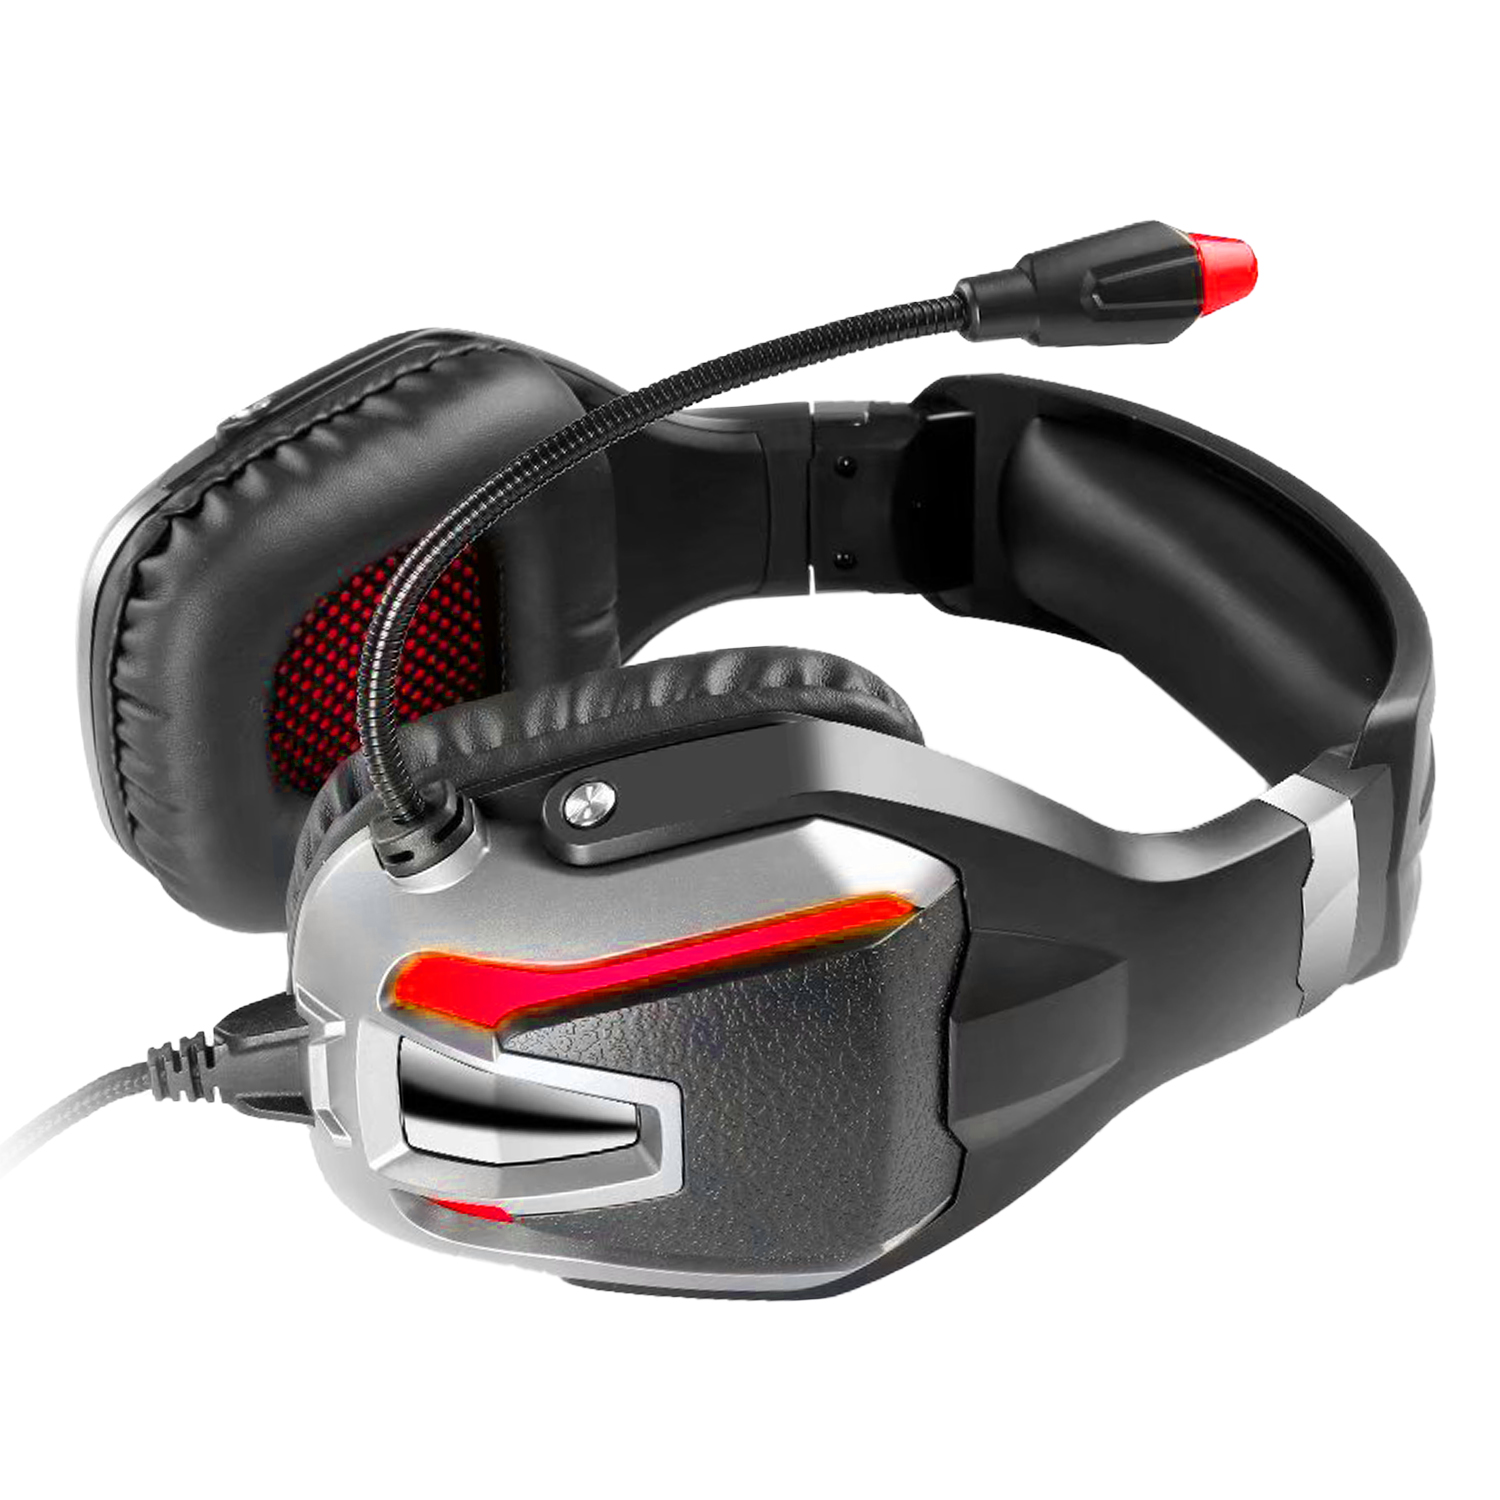 Fashion Virtual 7.1 Gaming Headphone USB LED Professional Recording Studio Cheap USB Headset with Microphone USB Plug for PC PS4